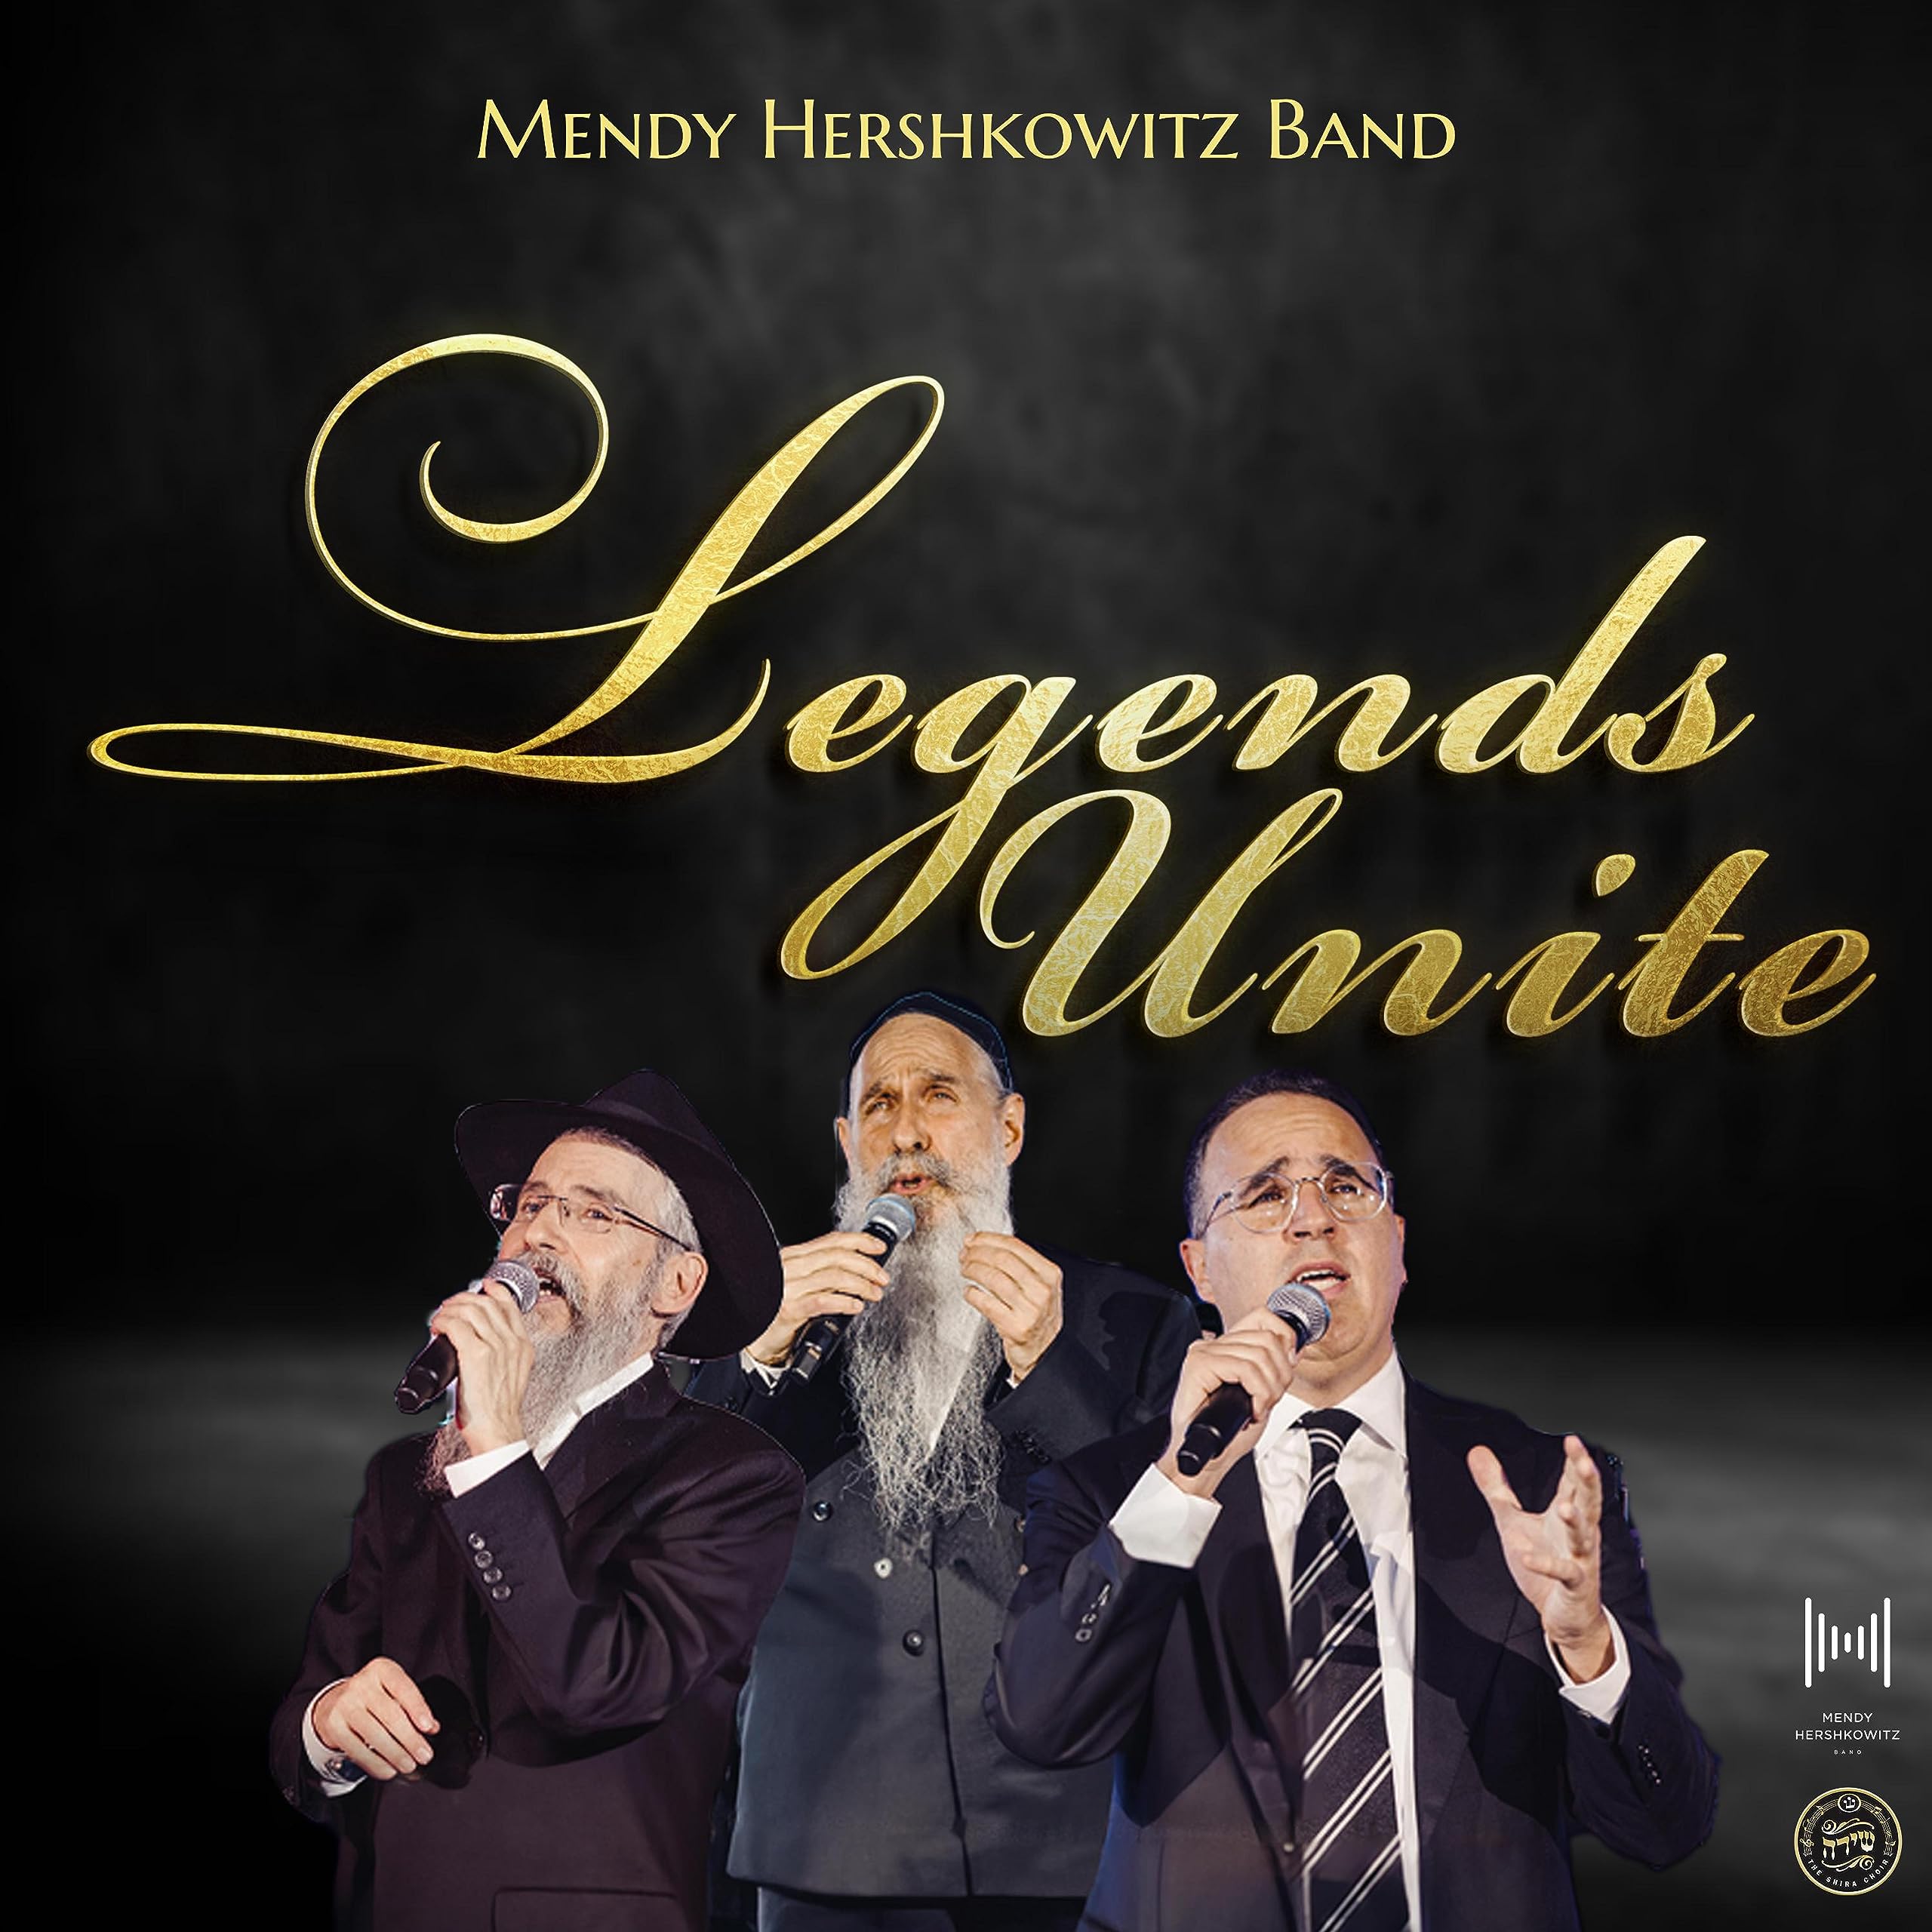 Mendy Hershkowitz Band ft. Mordechai Ben David, Avraham Fried, Yaakov Shwekey & The Shira Choir - Legends Unite (Single)